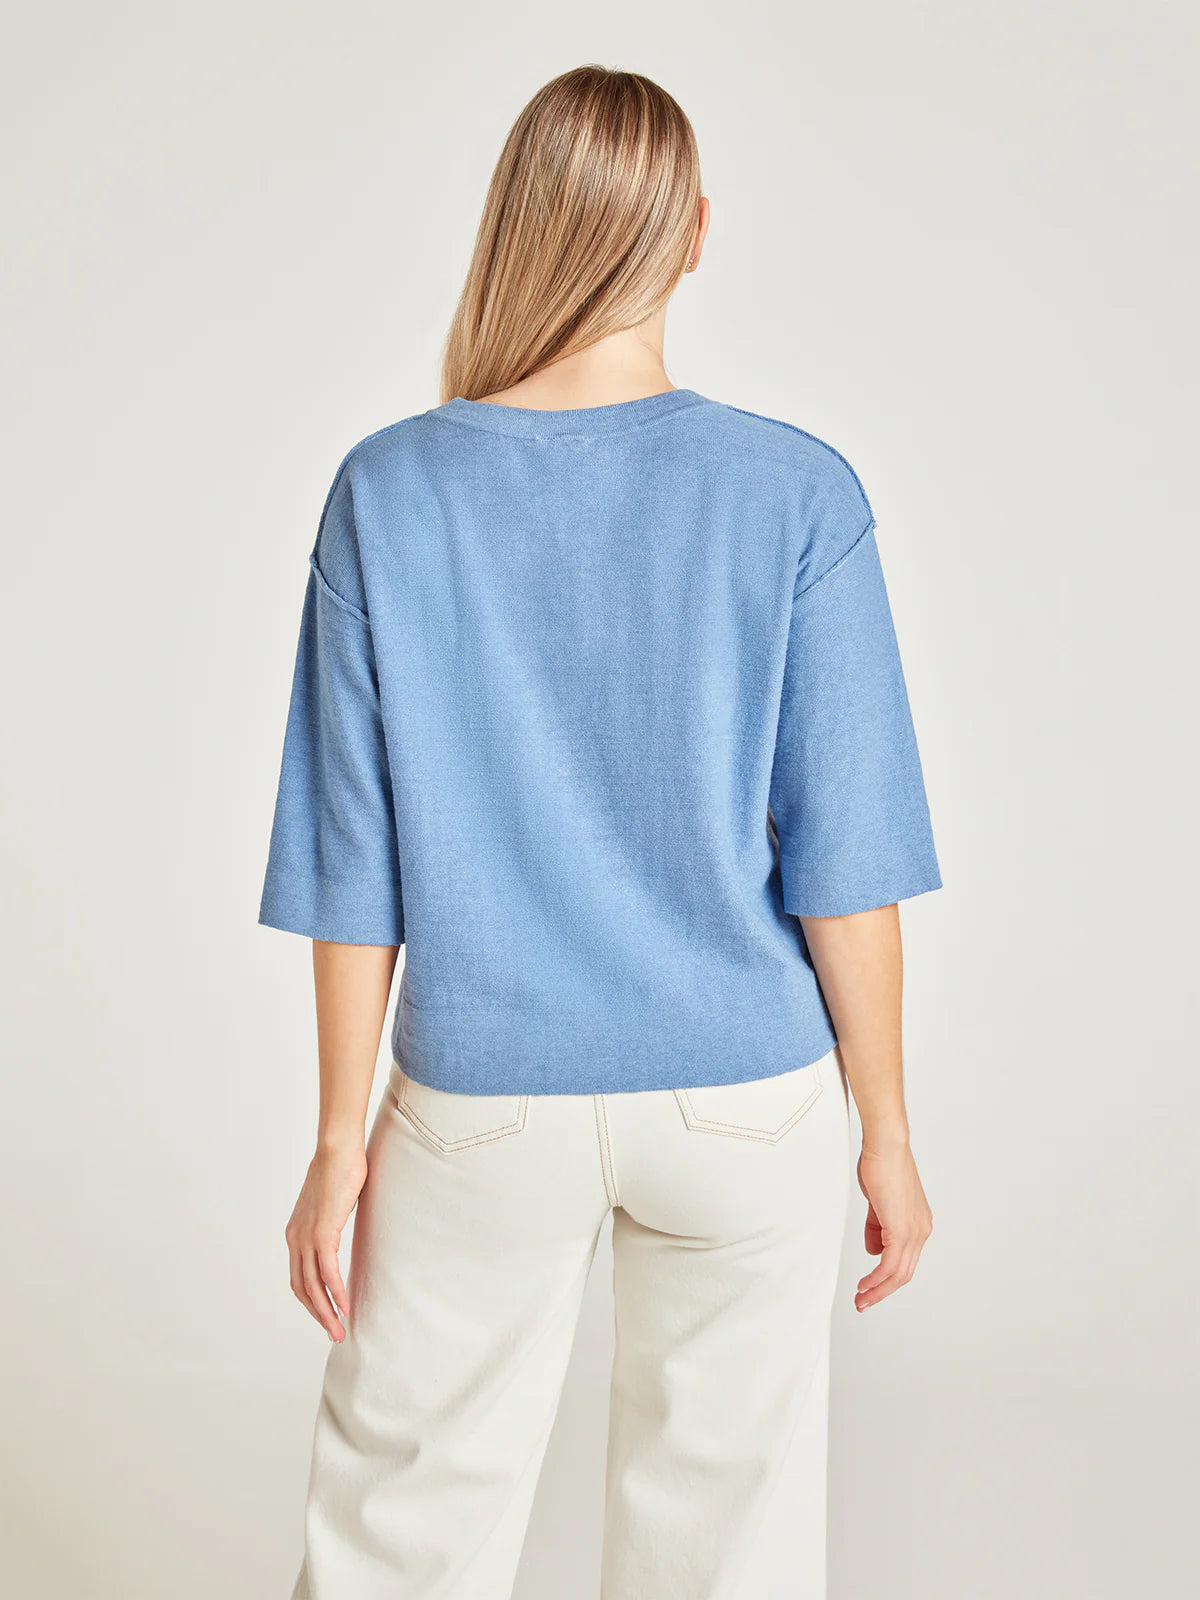 Organic Cotton/Wool Knit Tee - Denim Blue